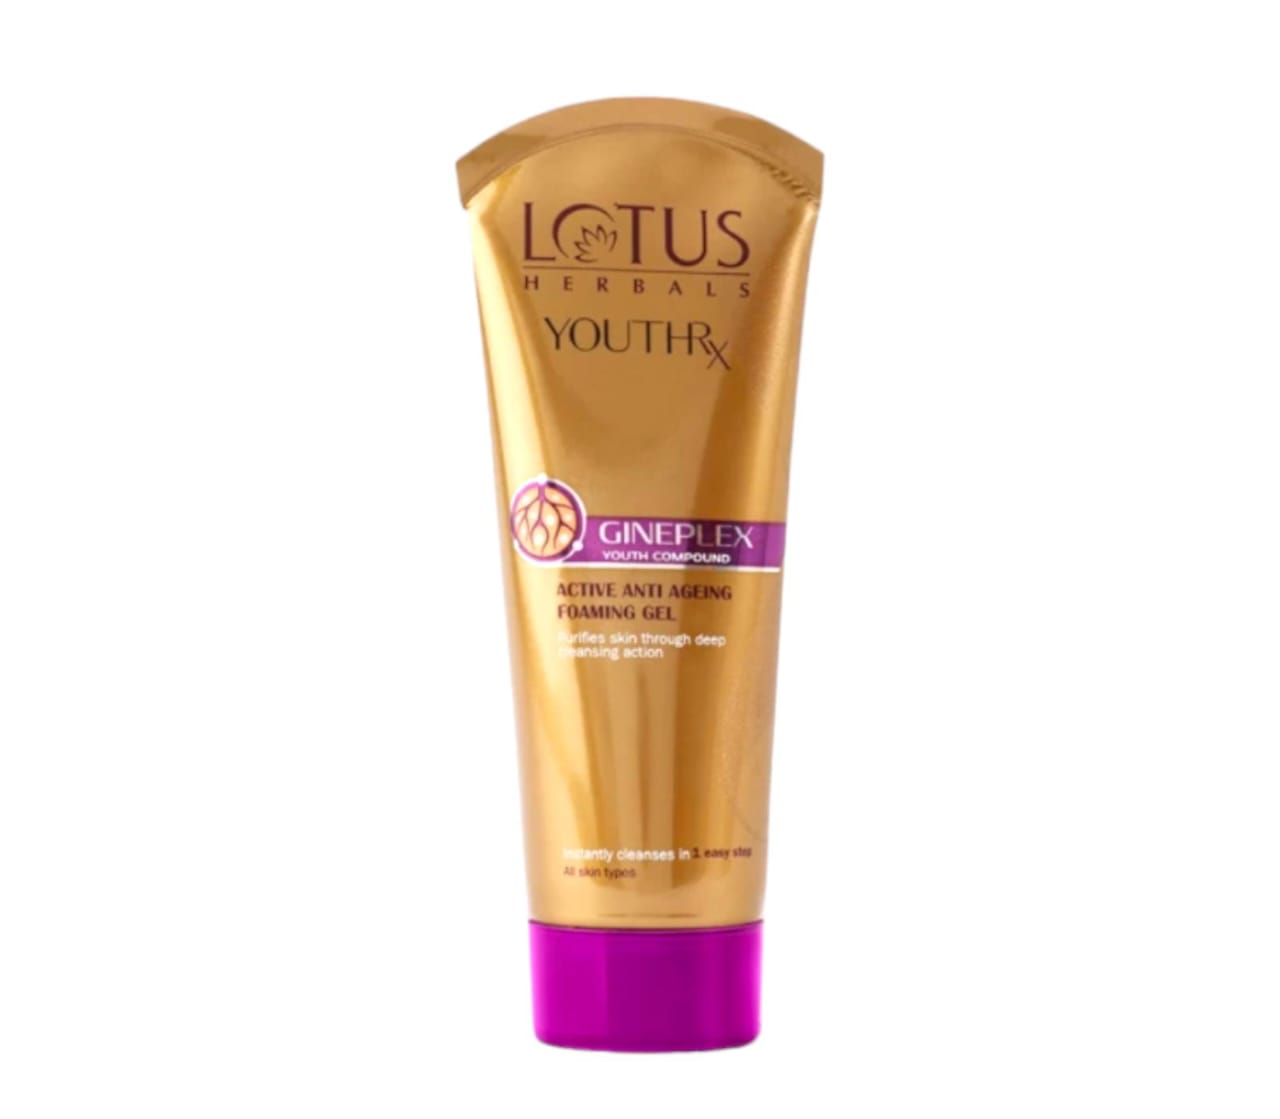 Lotus Herbals YouthRx Anti Ageing Foaming Gel Face Wash